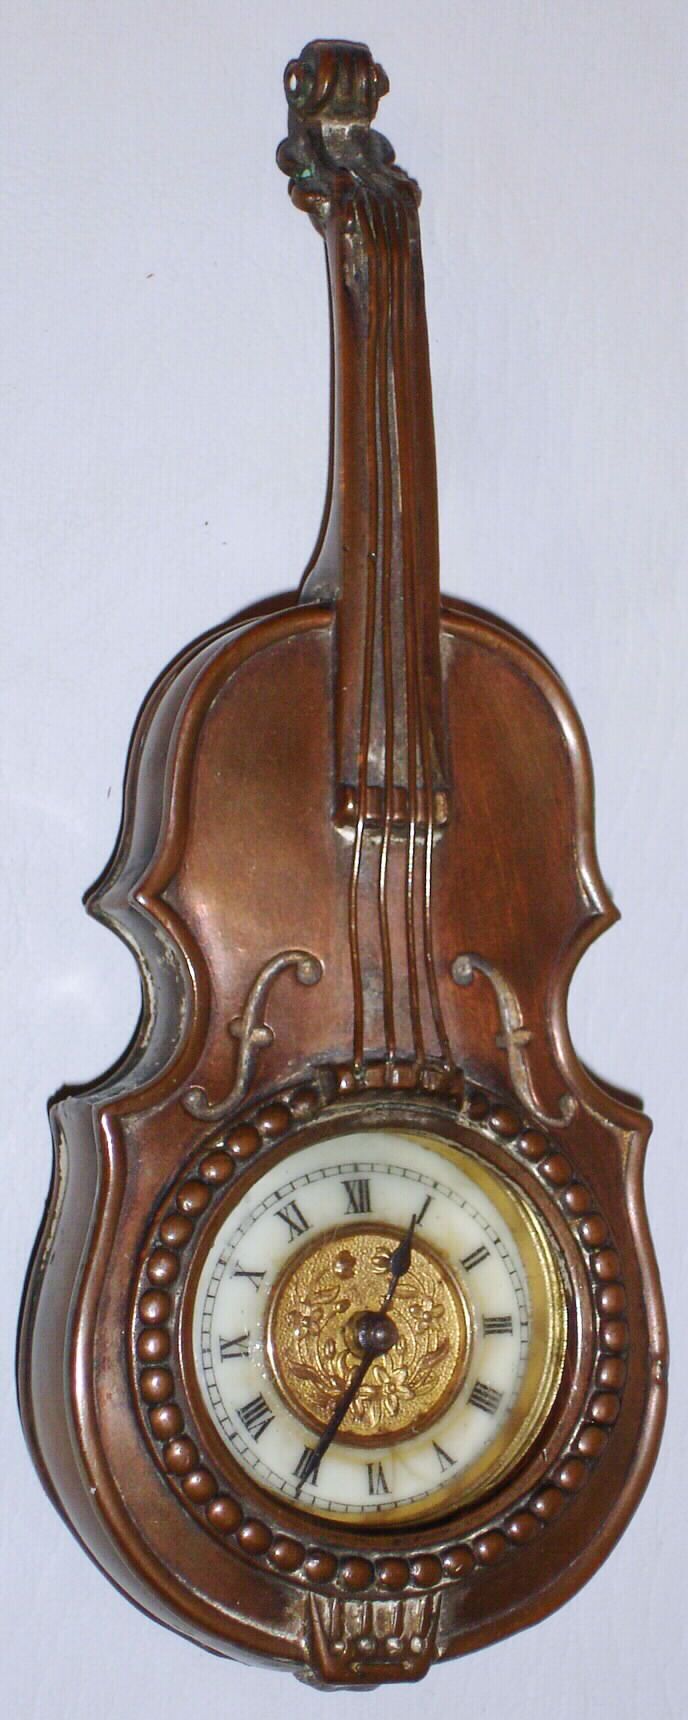 Antique Clock in the shape of a violin. #clock #violin #antique